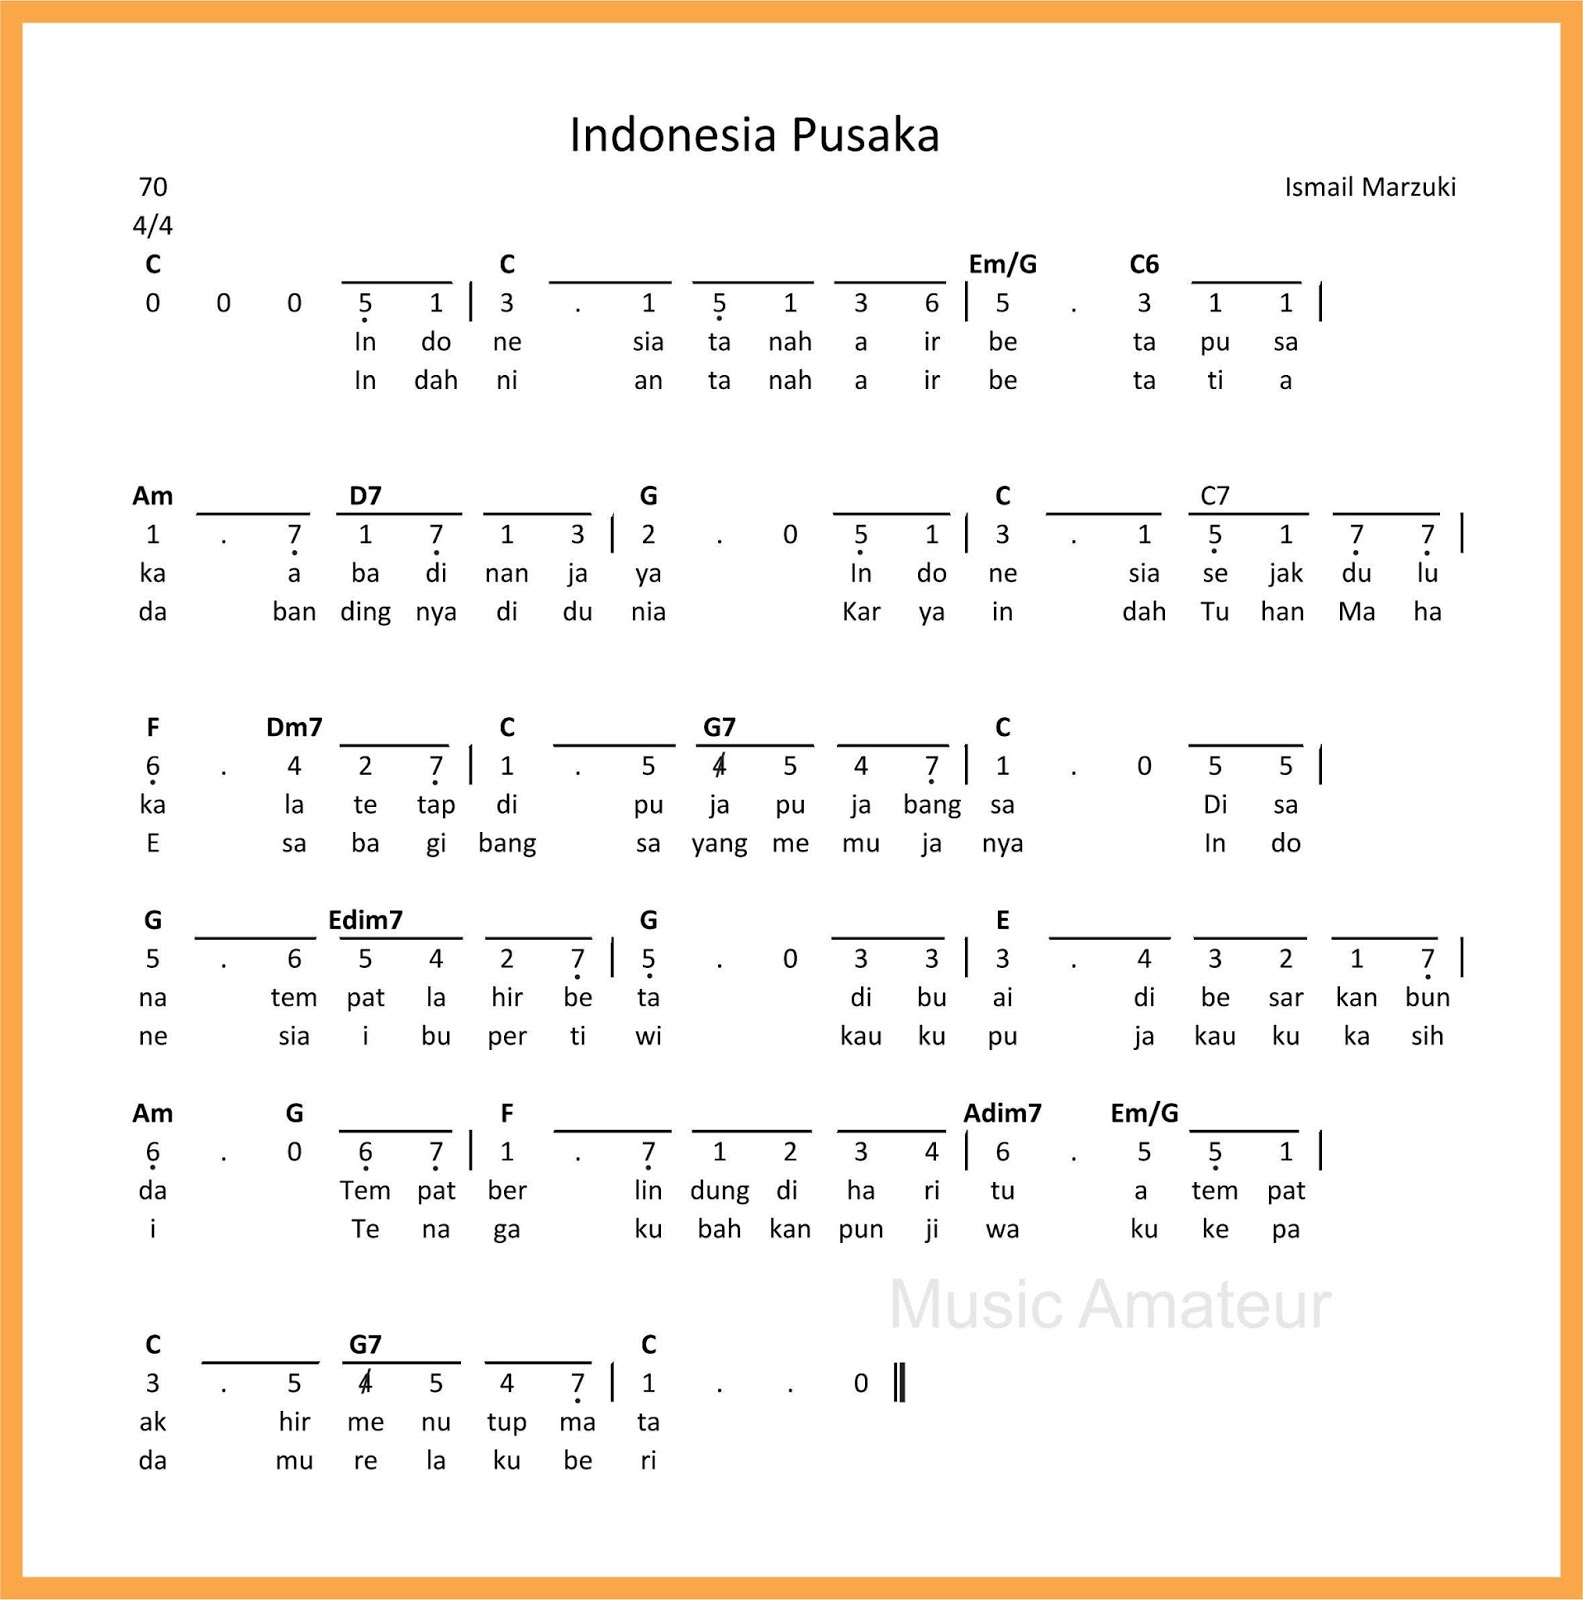 Not Lagu Indonesia Pusaka